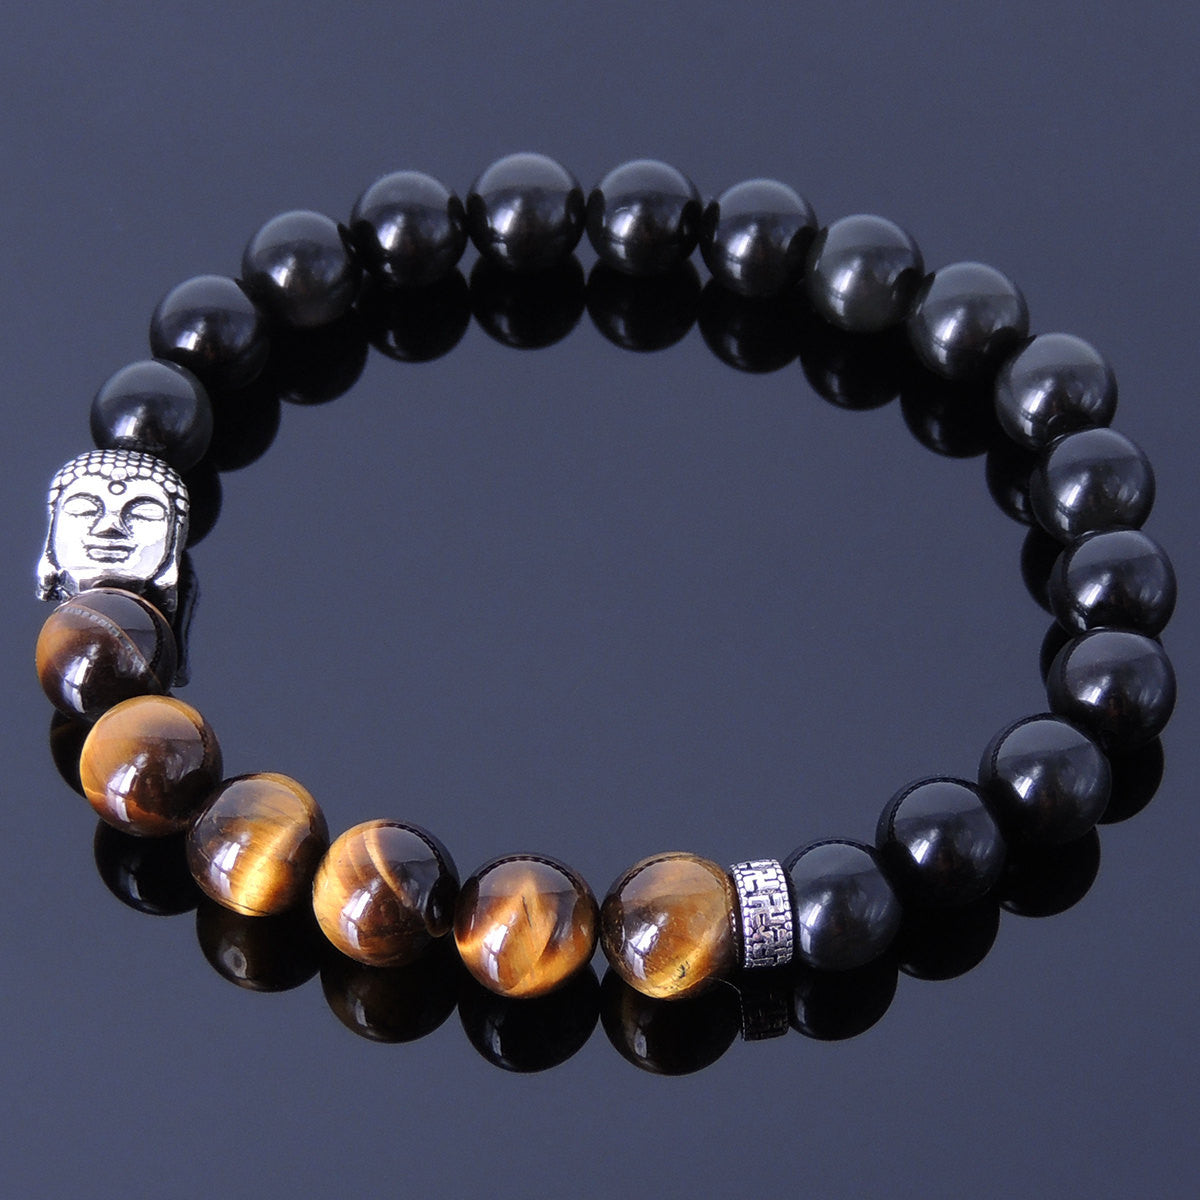 Rainbow Black Obsidian & Brown Tiger Eye Healing Gemstone Bracelet with S925 Sterling Silver Sakyamuni Buddha & OM Meditation Spacer Bead - Handmade by Gem & Silver BR329